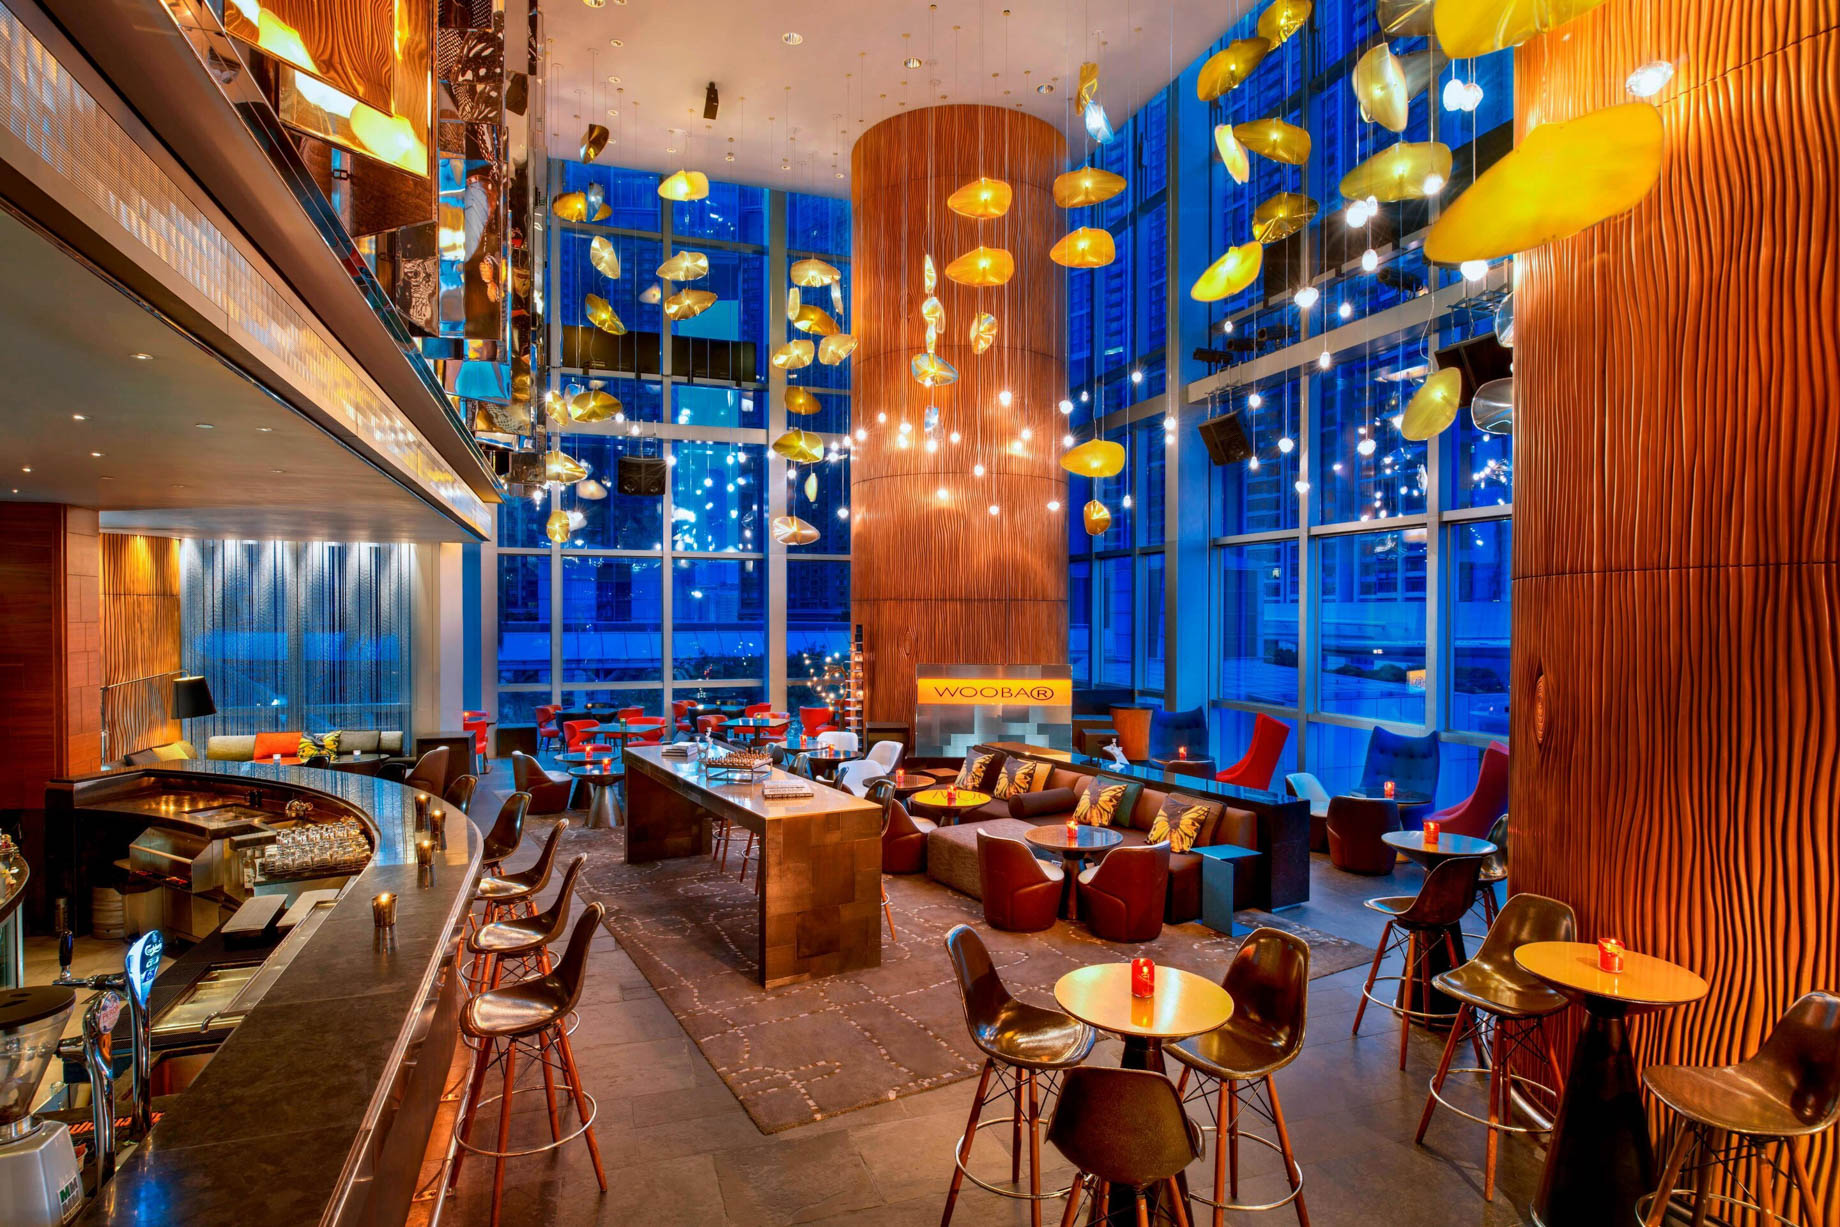 W Hong Kong Hotel – Hong Kong – WOOBAR Lounge Decor